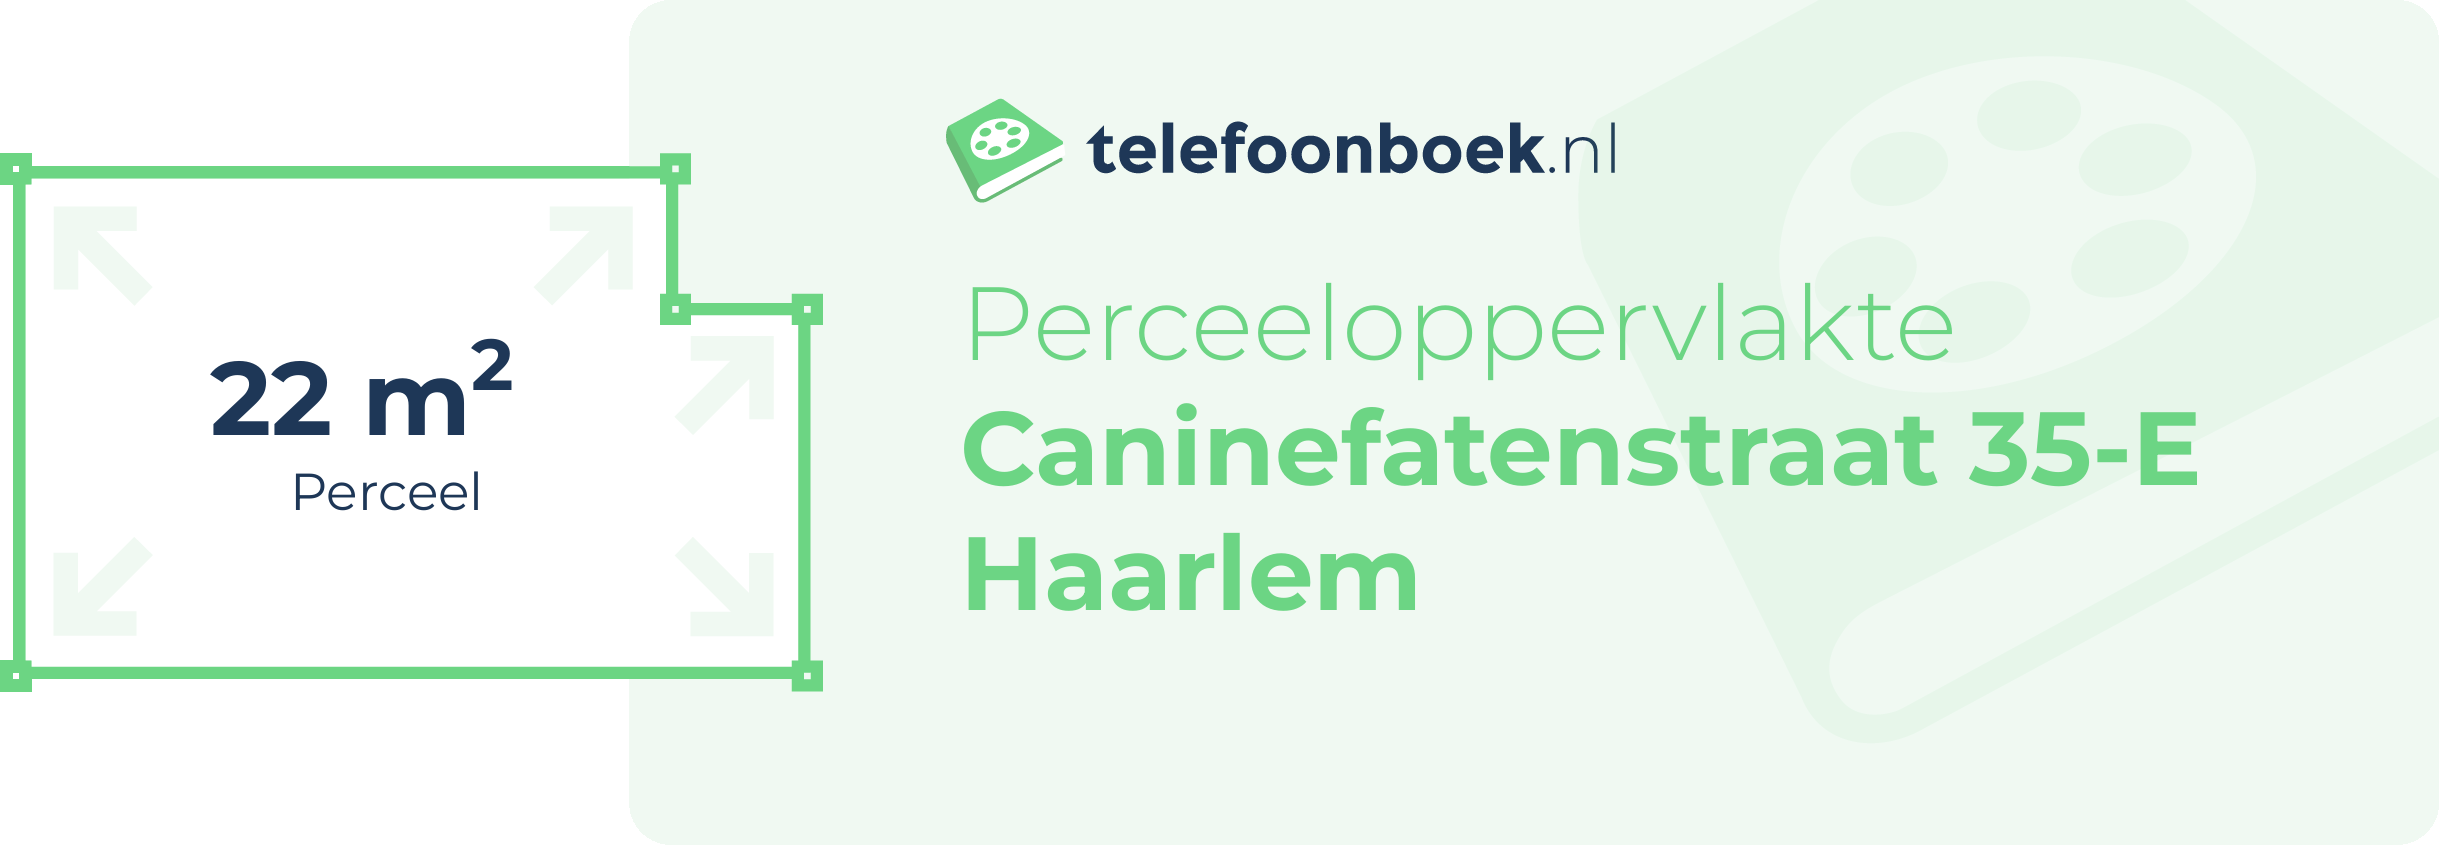 Perceeloppervlakte Caninefatenstraat 35-E Haarlem